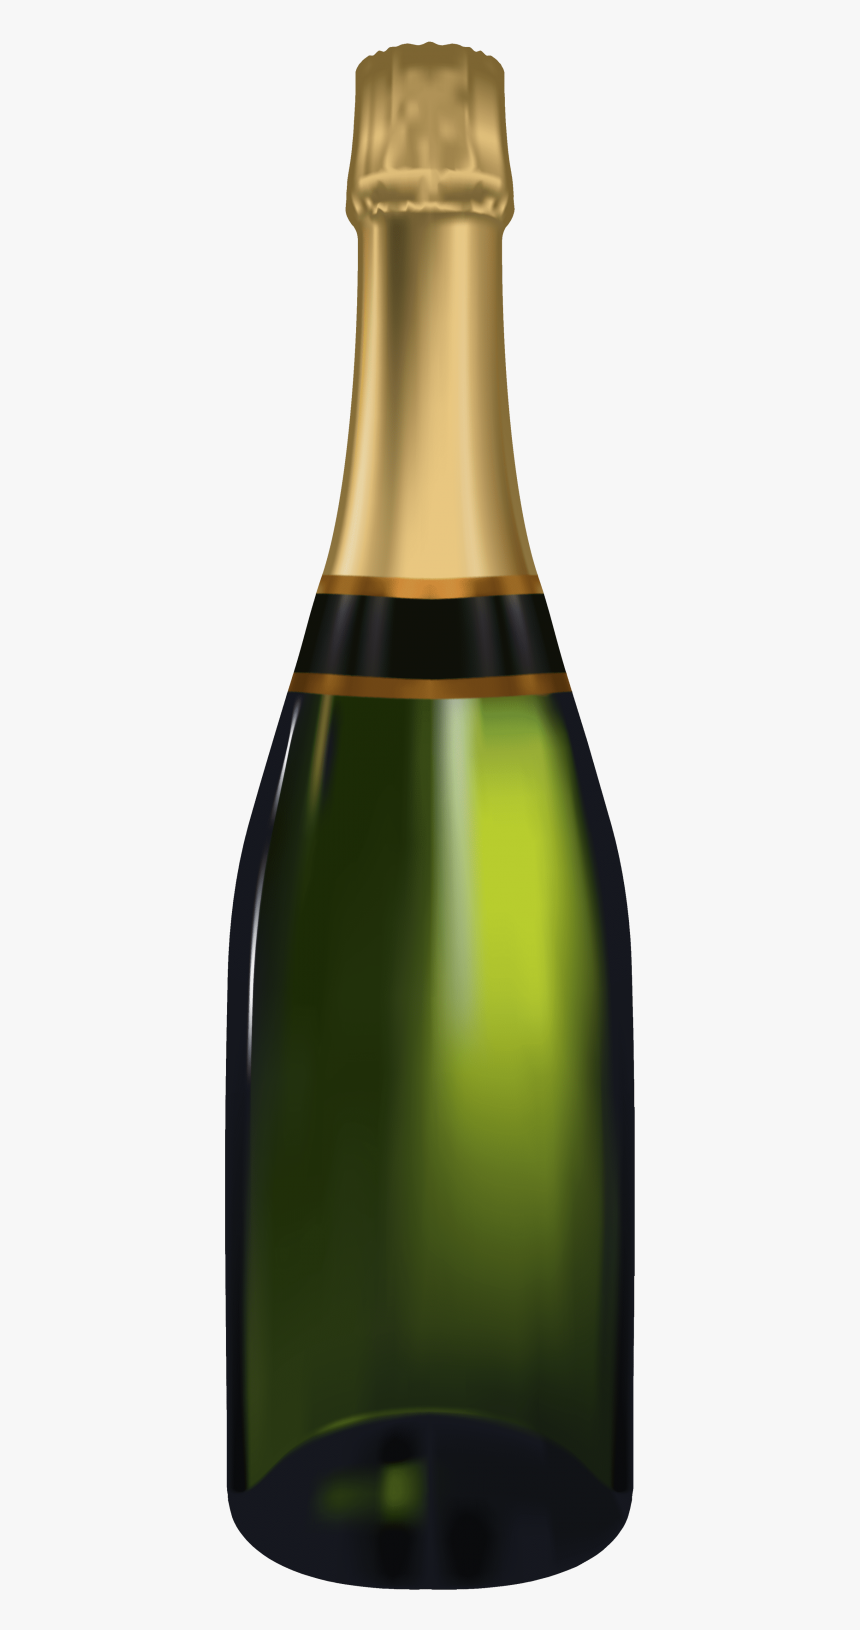 Champagne Bottle Png - Champagne Bottle Transparent Background, Png Download, Free Download